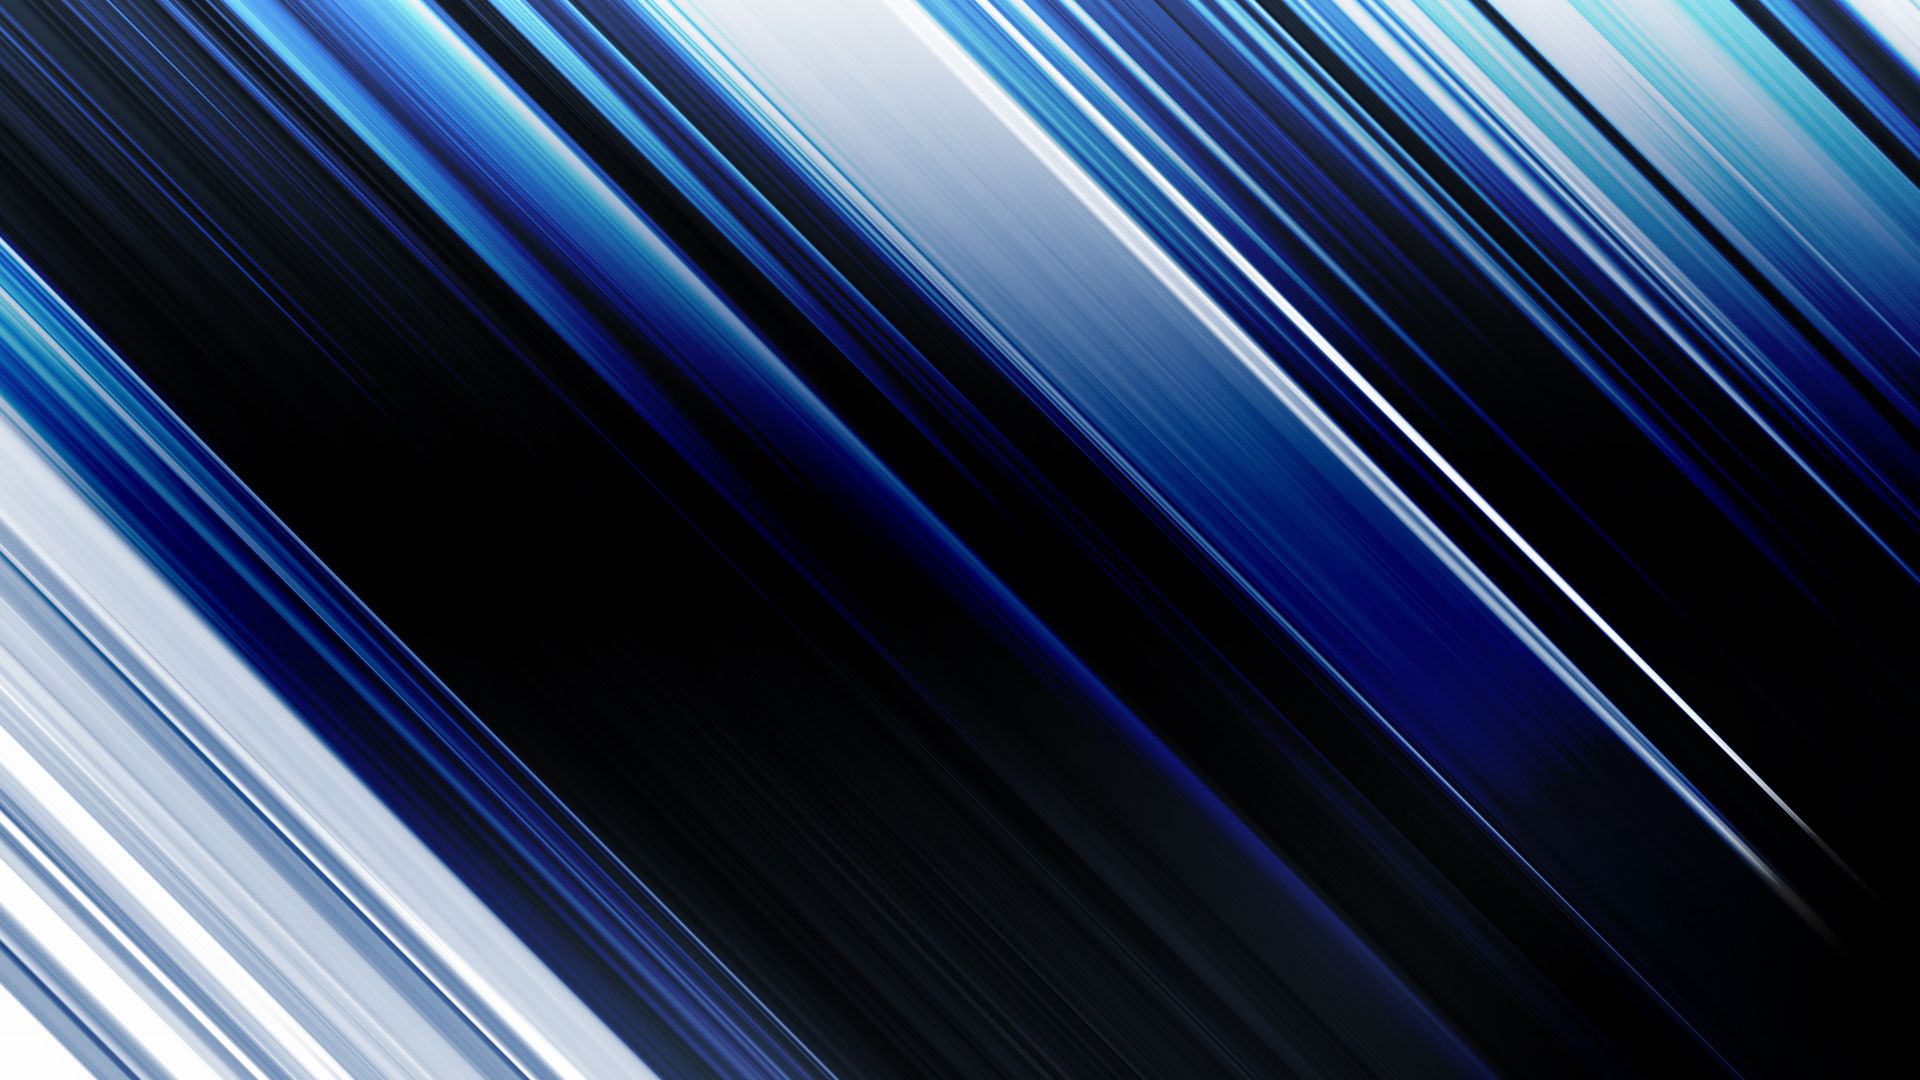 Abstract Blue Wallpaper Background For Desktop Wallpaper